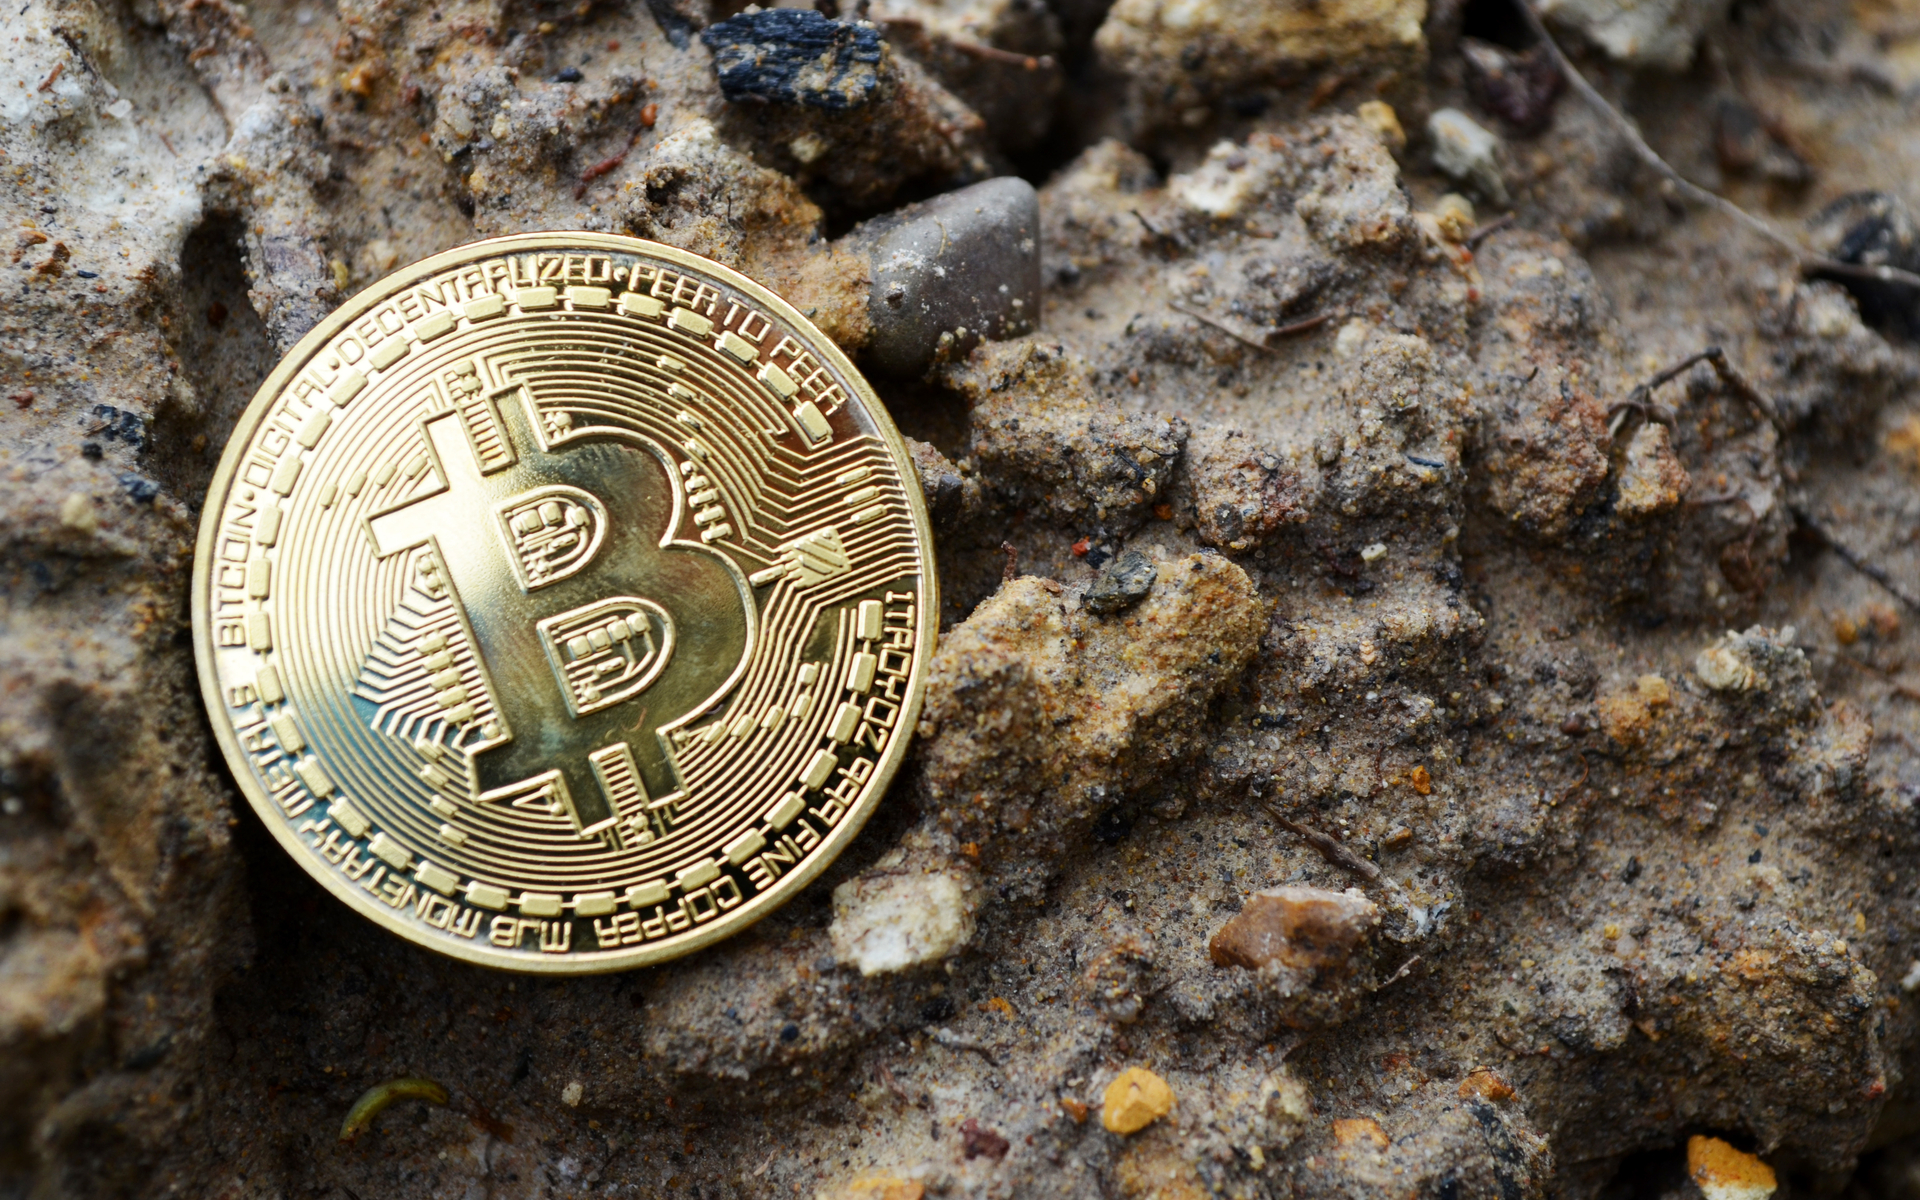 Bitcoin bottom at $5500 Says Top Tradingview Analyst